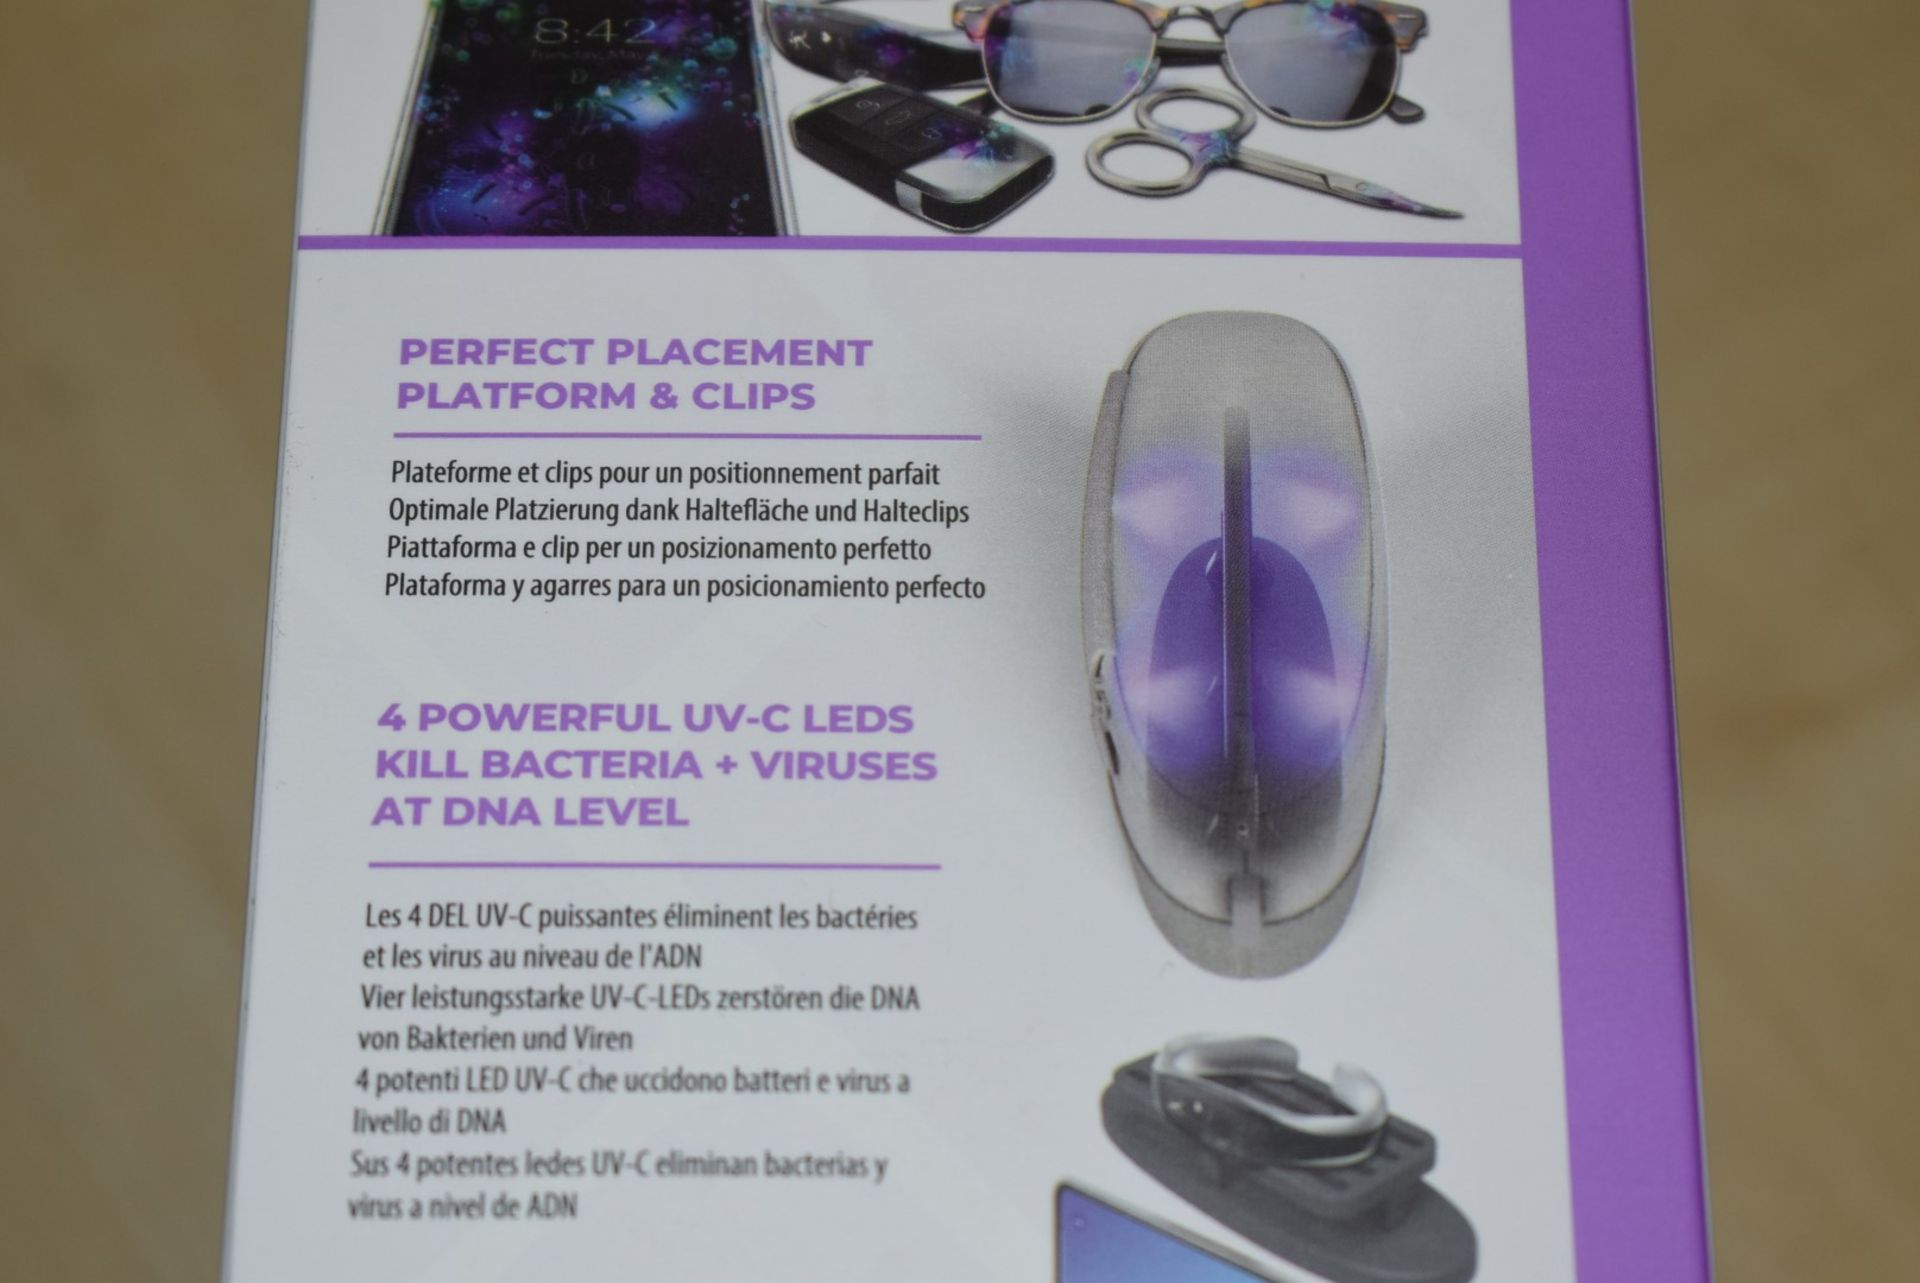 4 x Homedics UV Clean Portable Sanitiser Bags - Kills Upto 99.9% of Bacteria & Viruses in Just 60 - Image 12 of 19